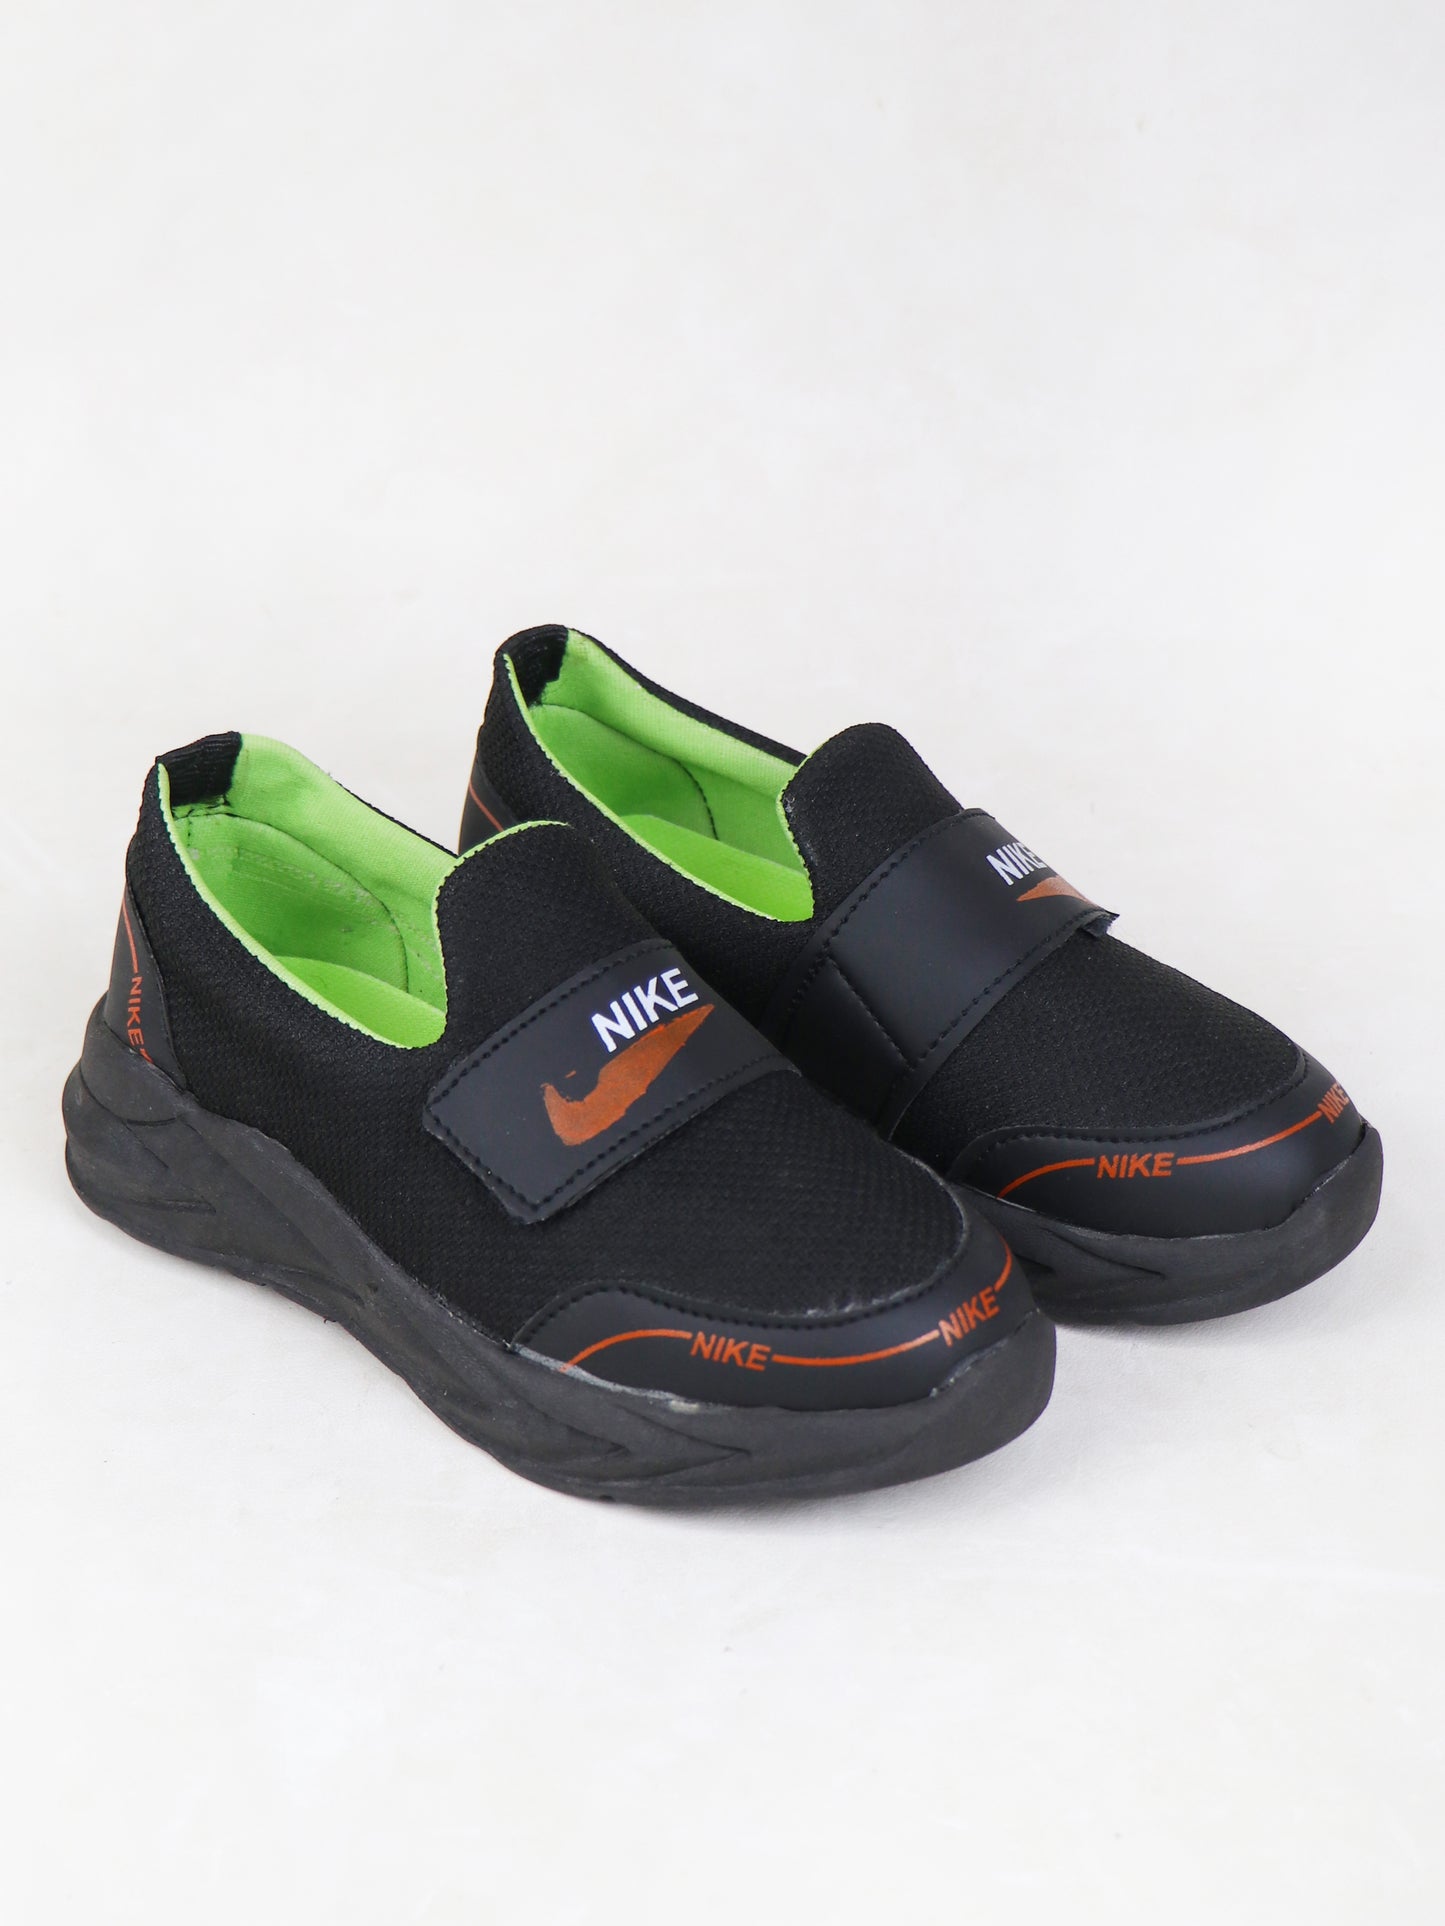 BJ19 Boys Shoes 8Yrs - 17Yrs NK Black